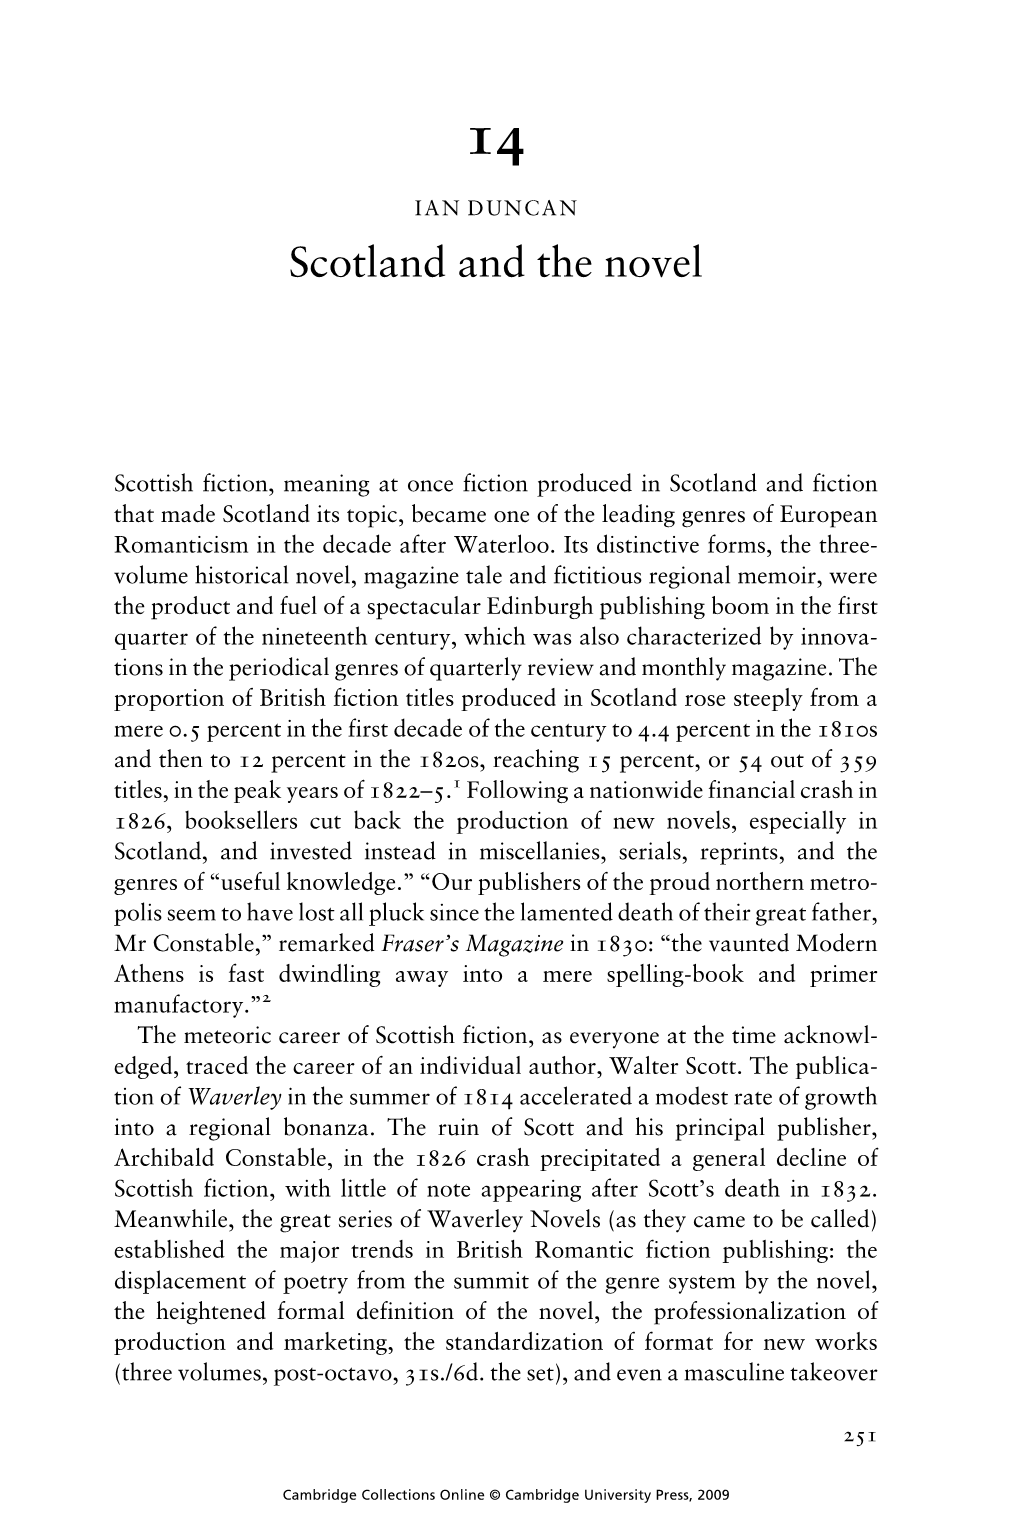 Scotland and the Novel